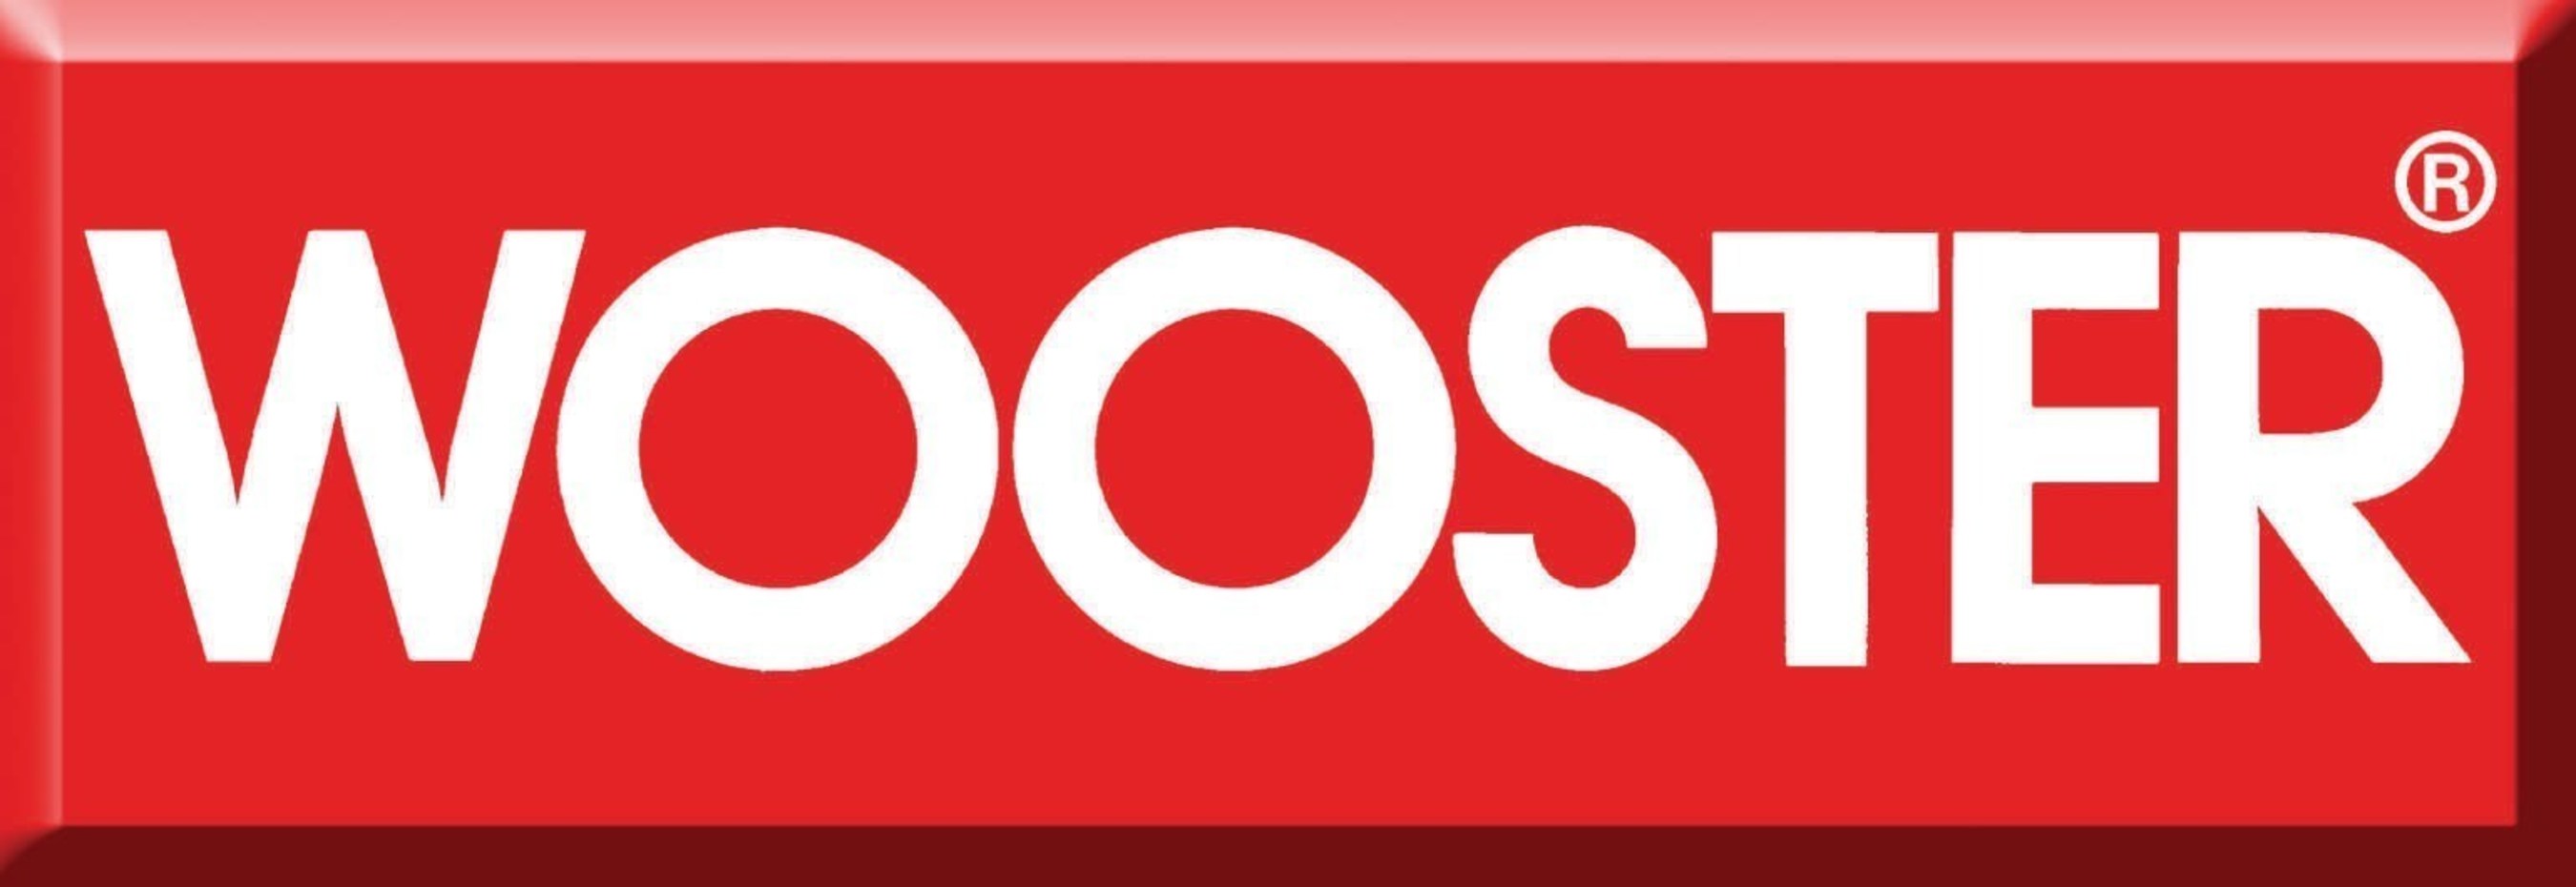 wooster logo